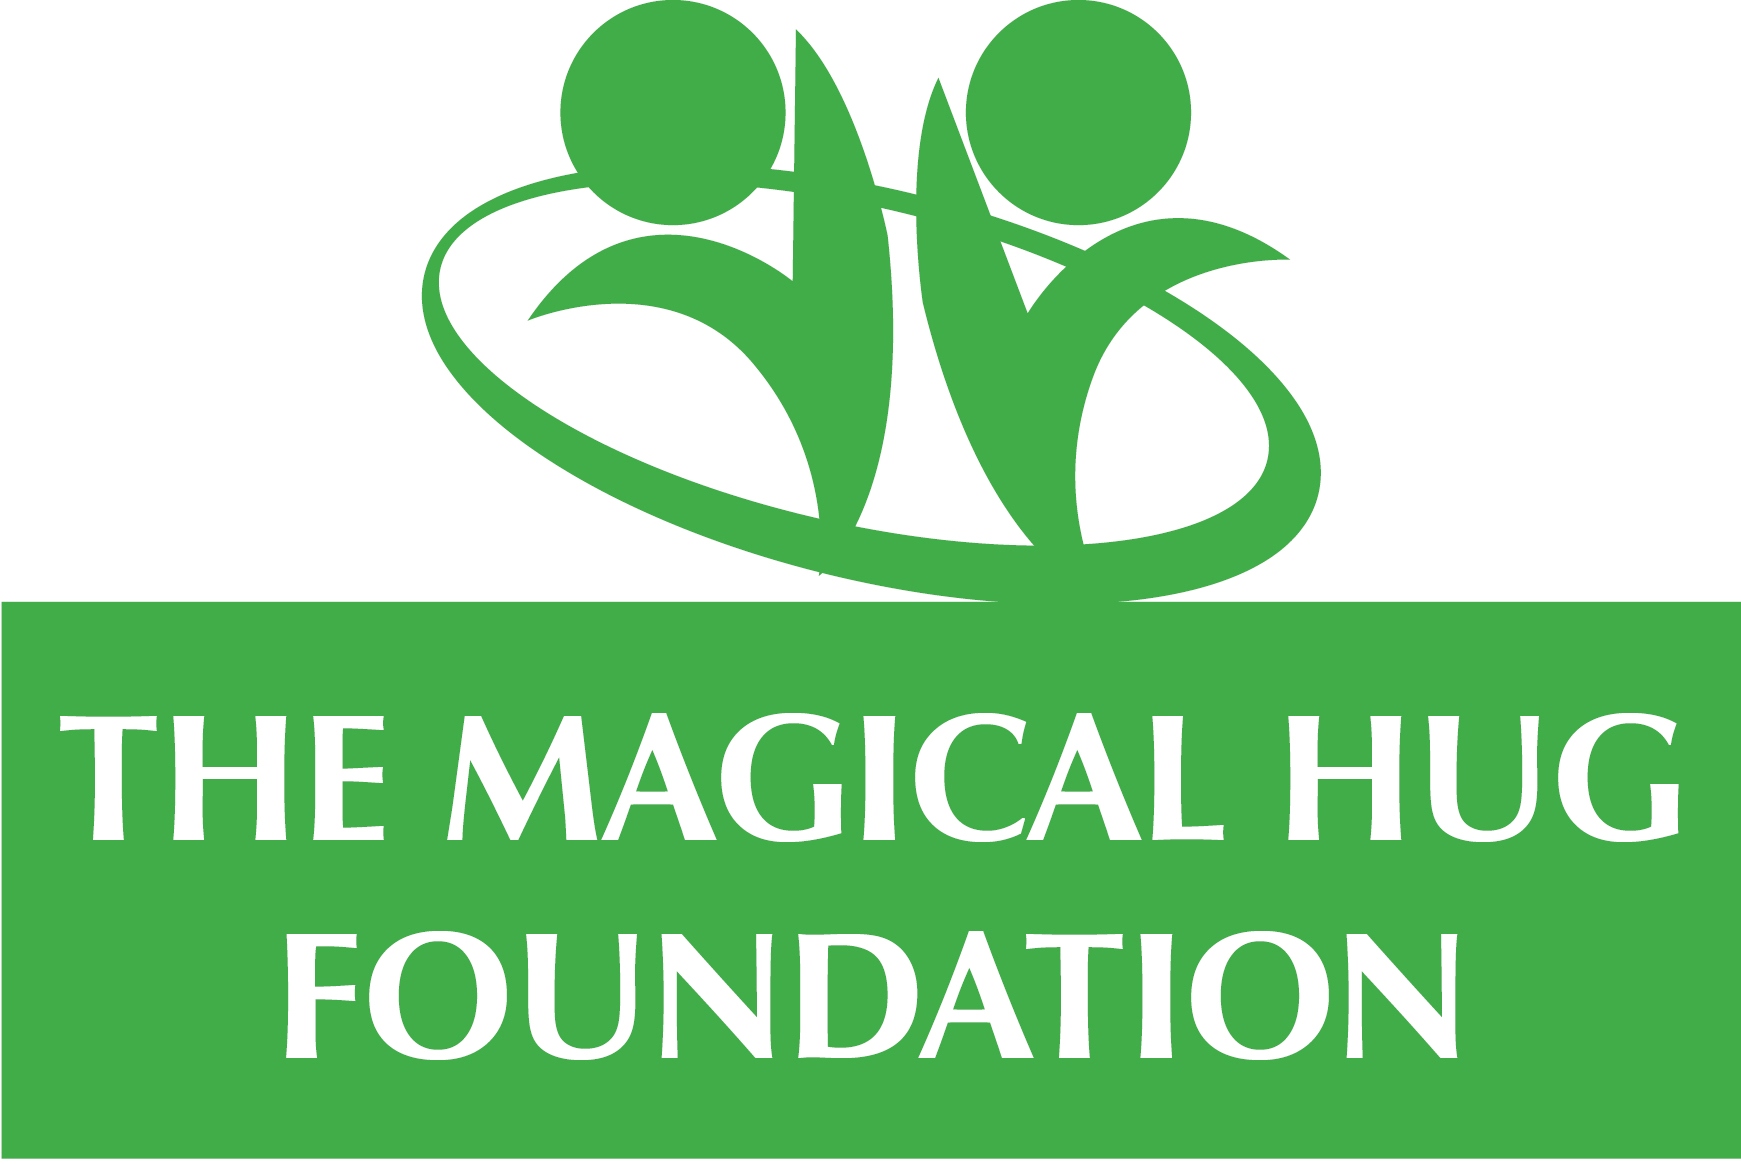 The Magical Hug Foundation